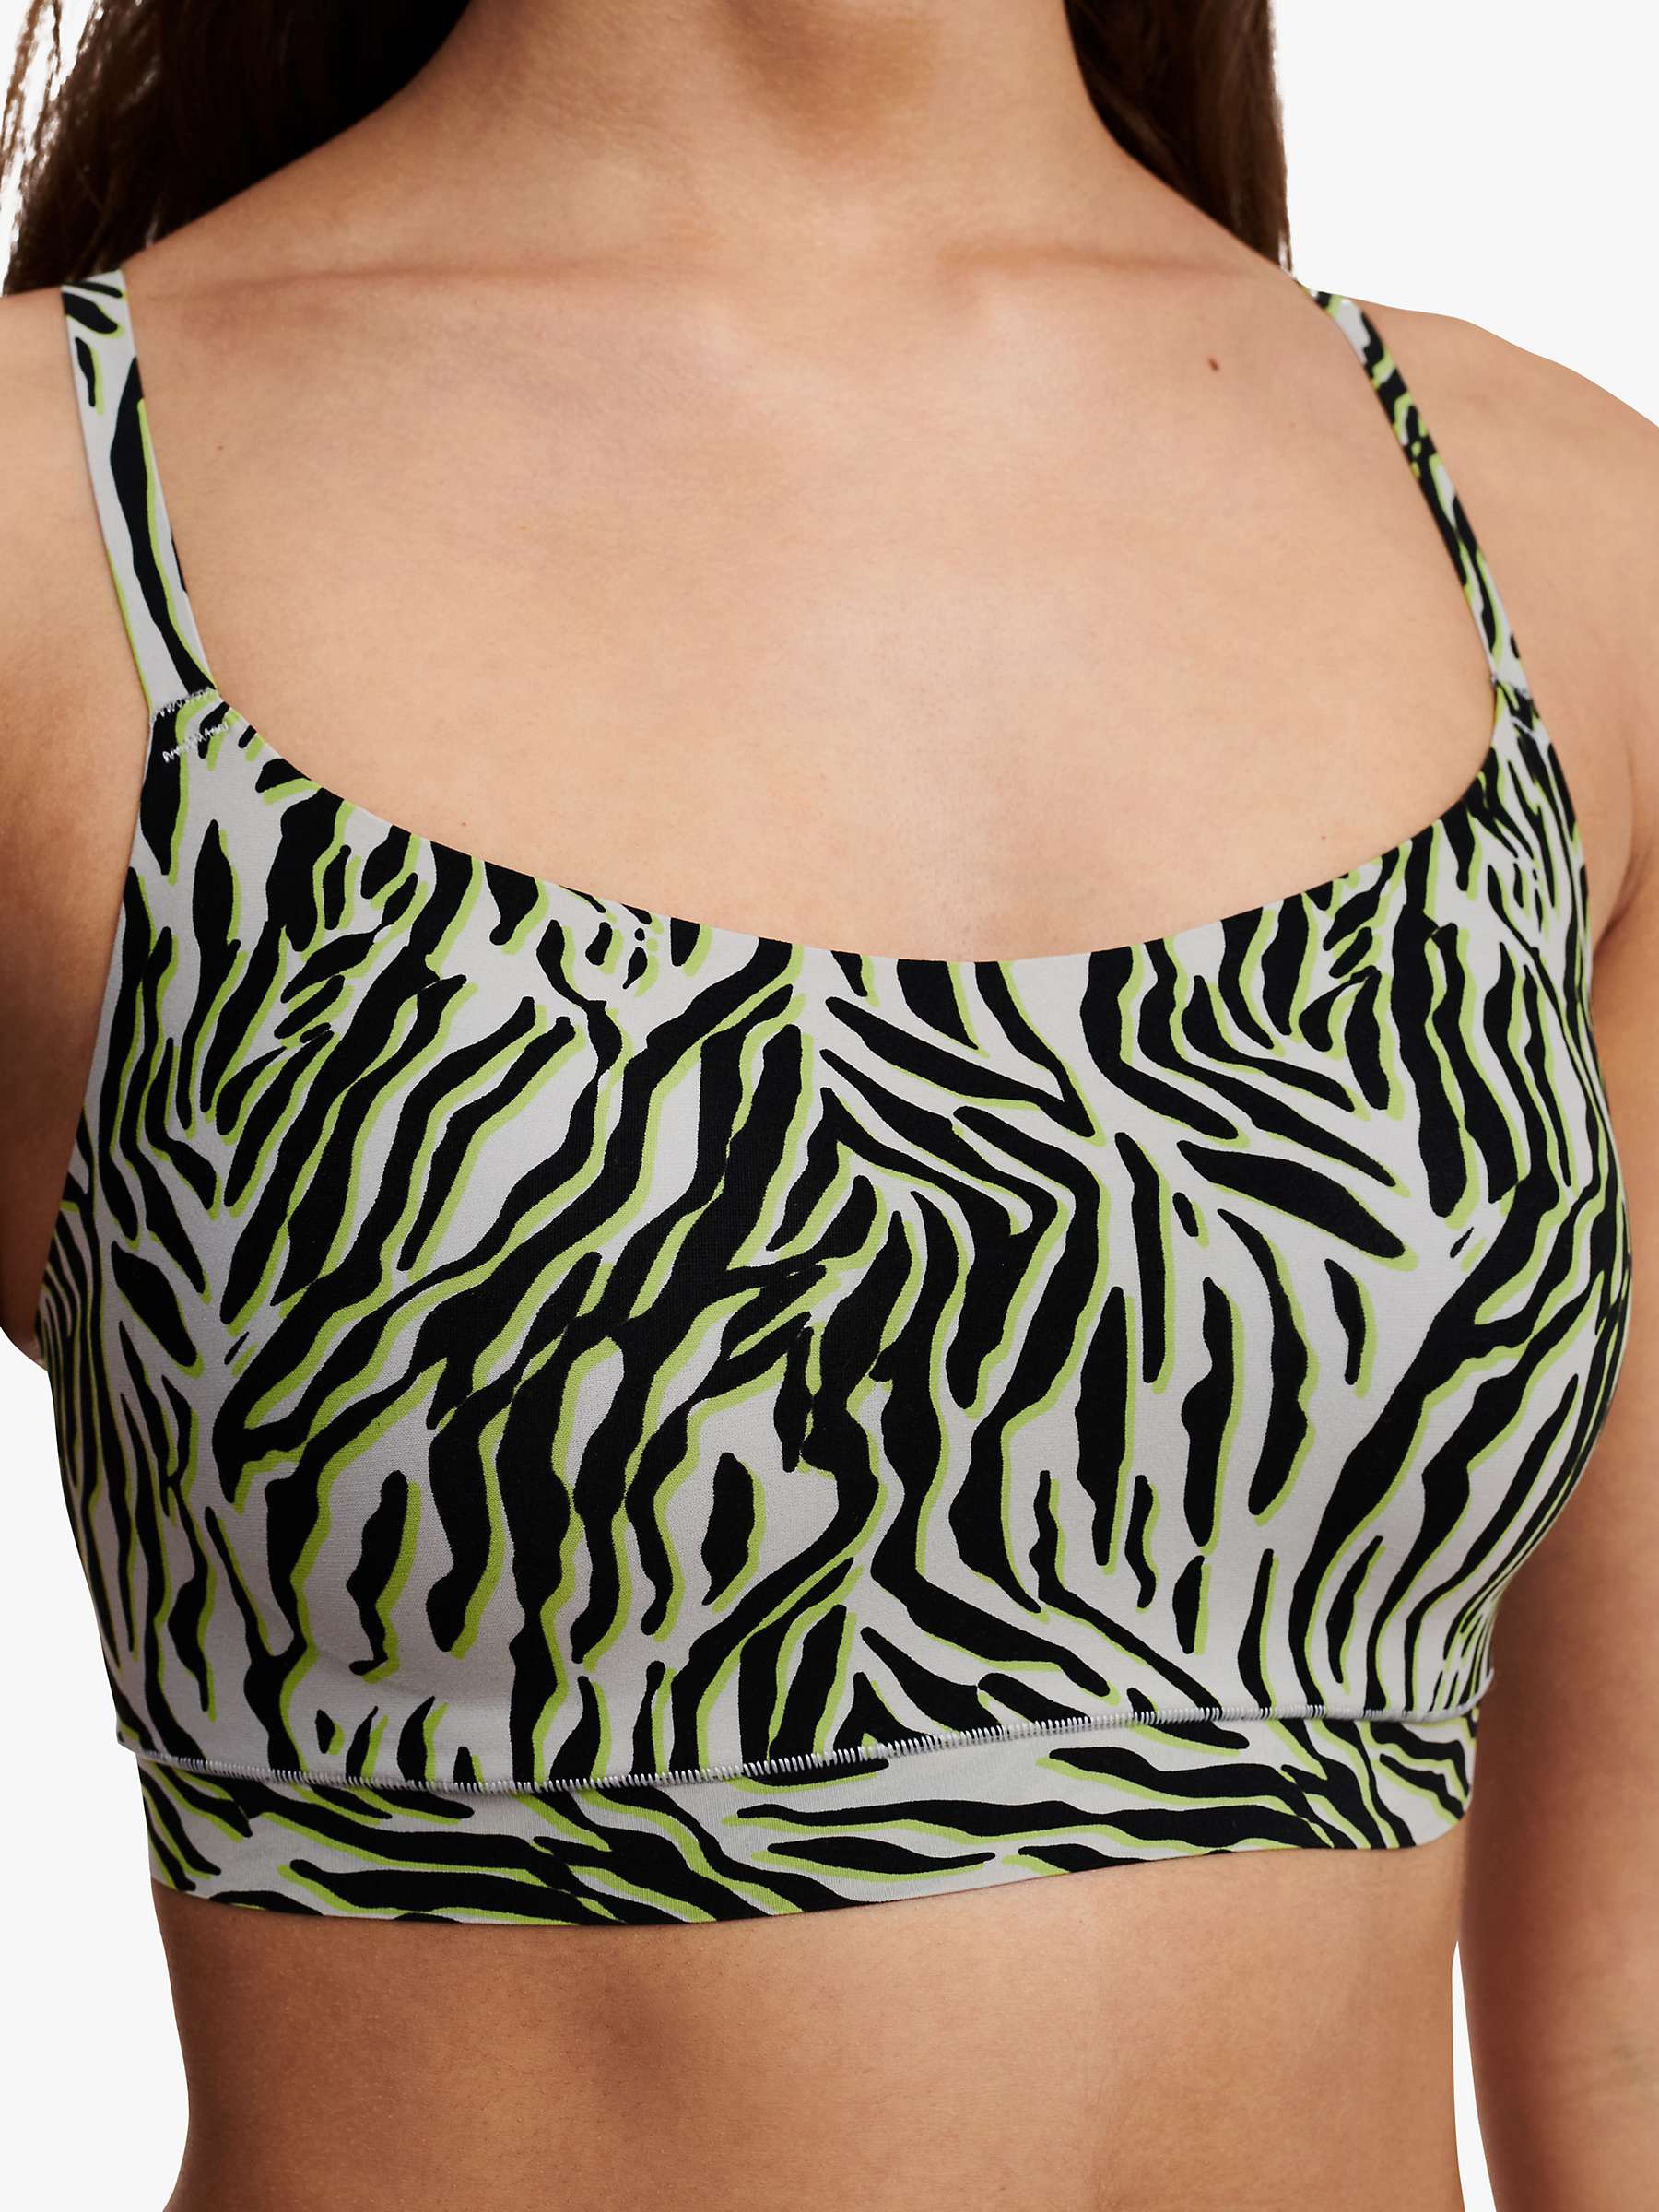 Buy Chantelle Soft Stretch Zebra Scoop Padded Bralette, Black/Multi Online at johnlewis.com